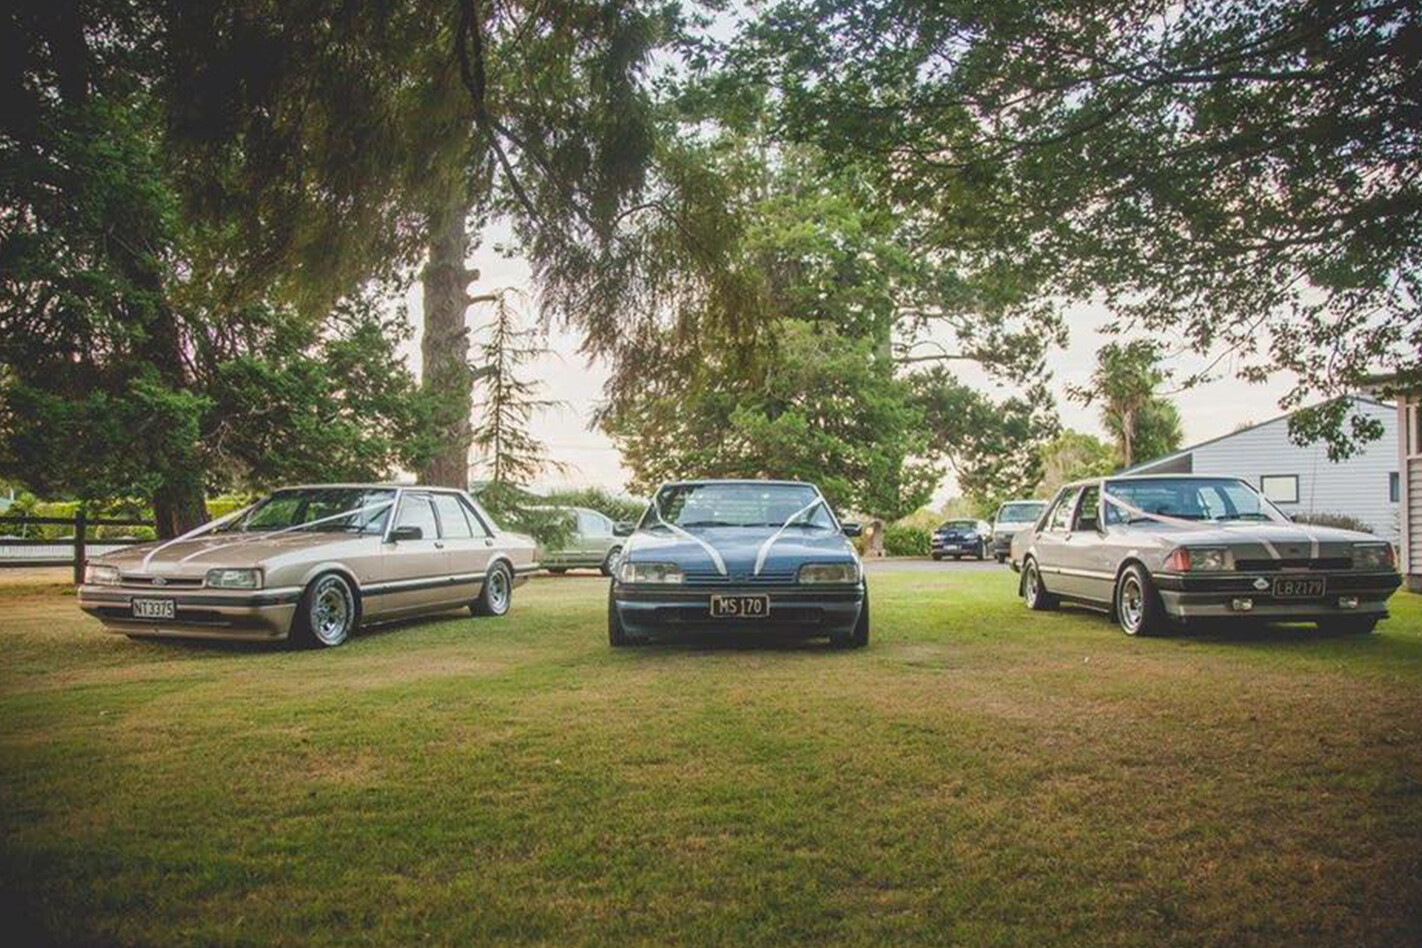 Kelsay Garaway's Falcon wedding cars